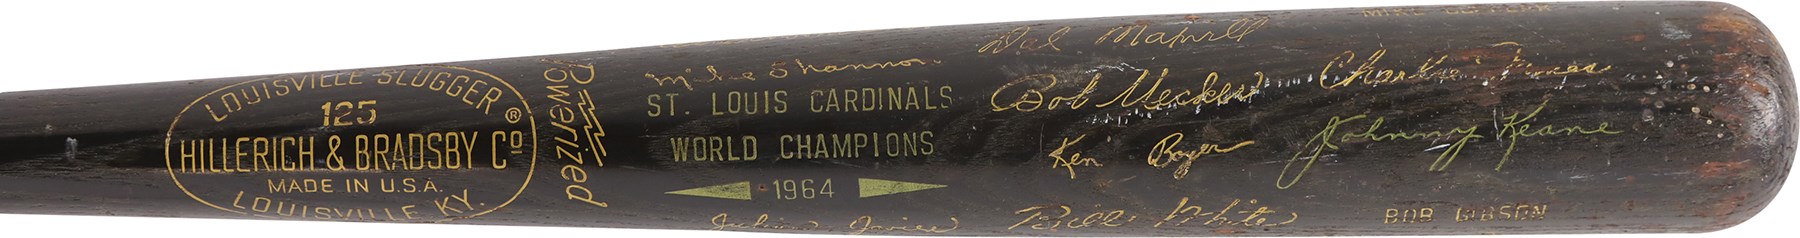 1964 World Champion St. Louis Cardinals Black Bat